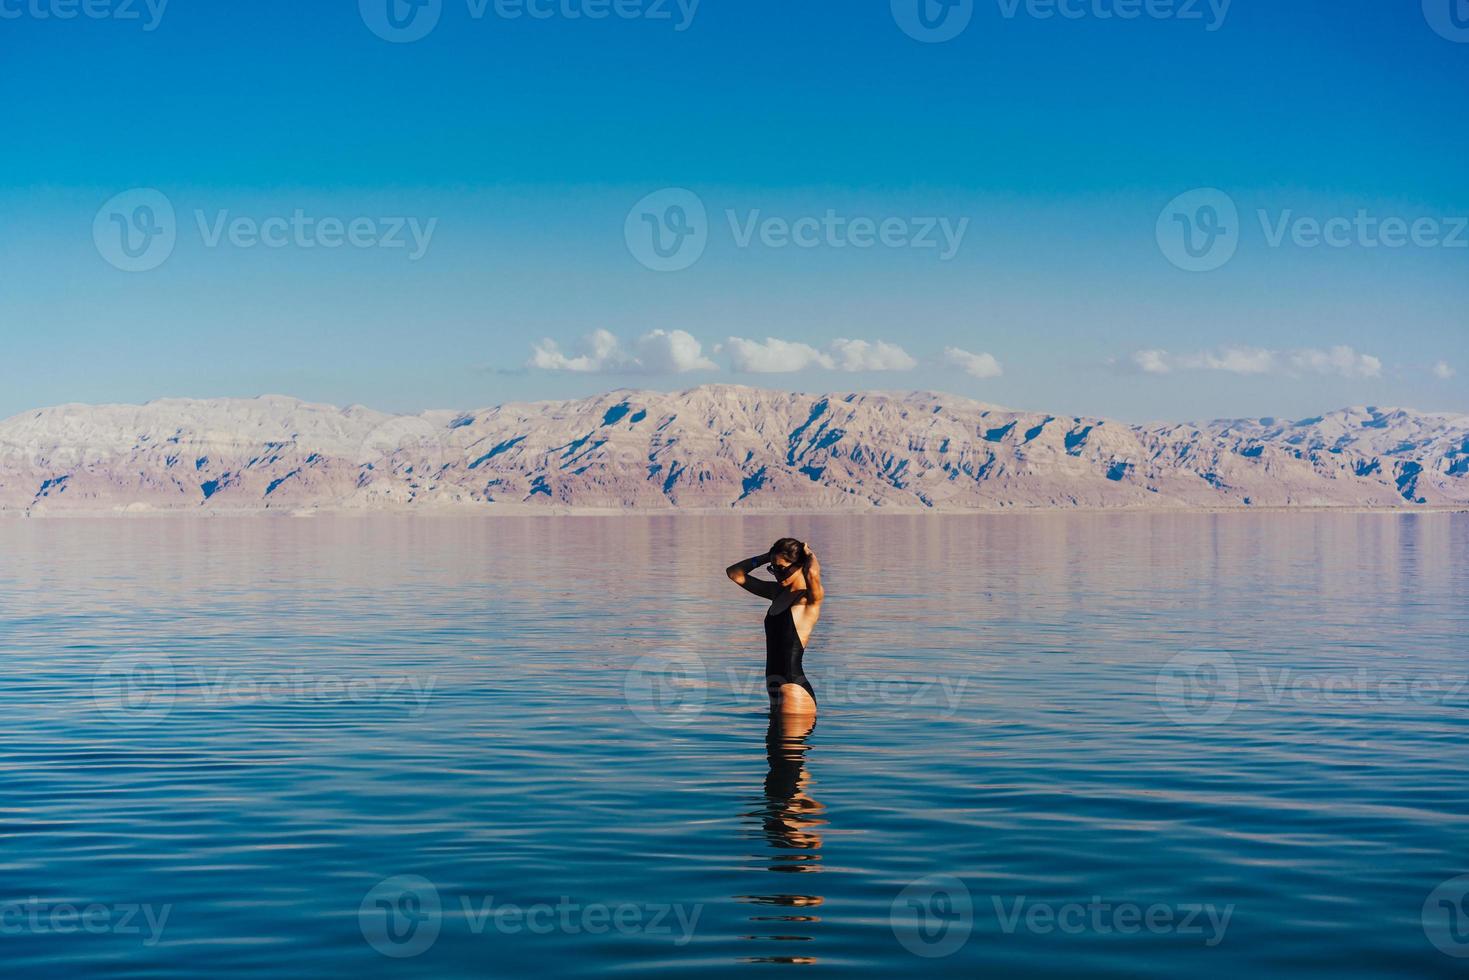 jeune femme allant à la mer morte, israël photo